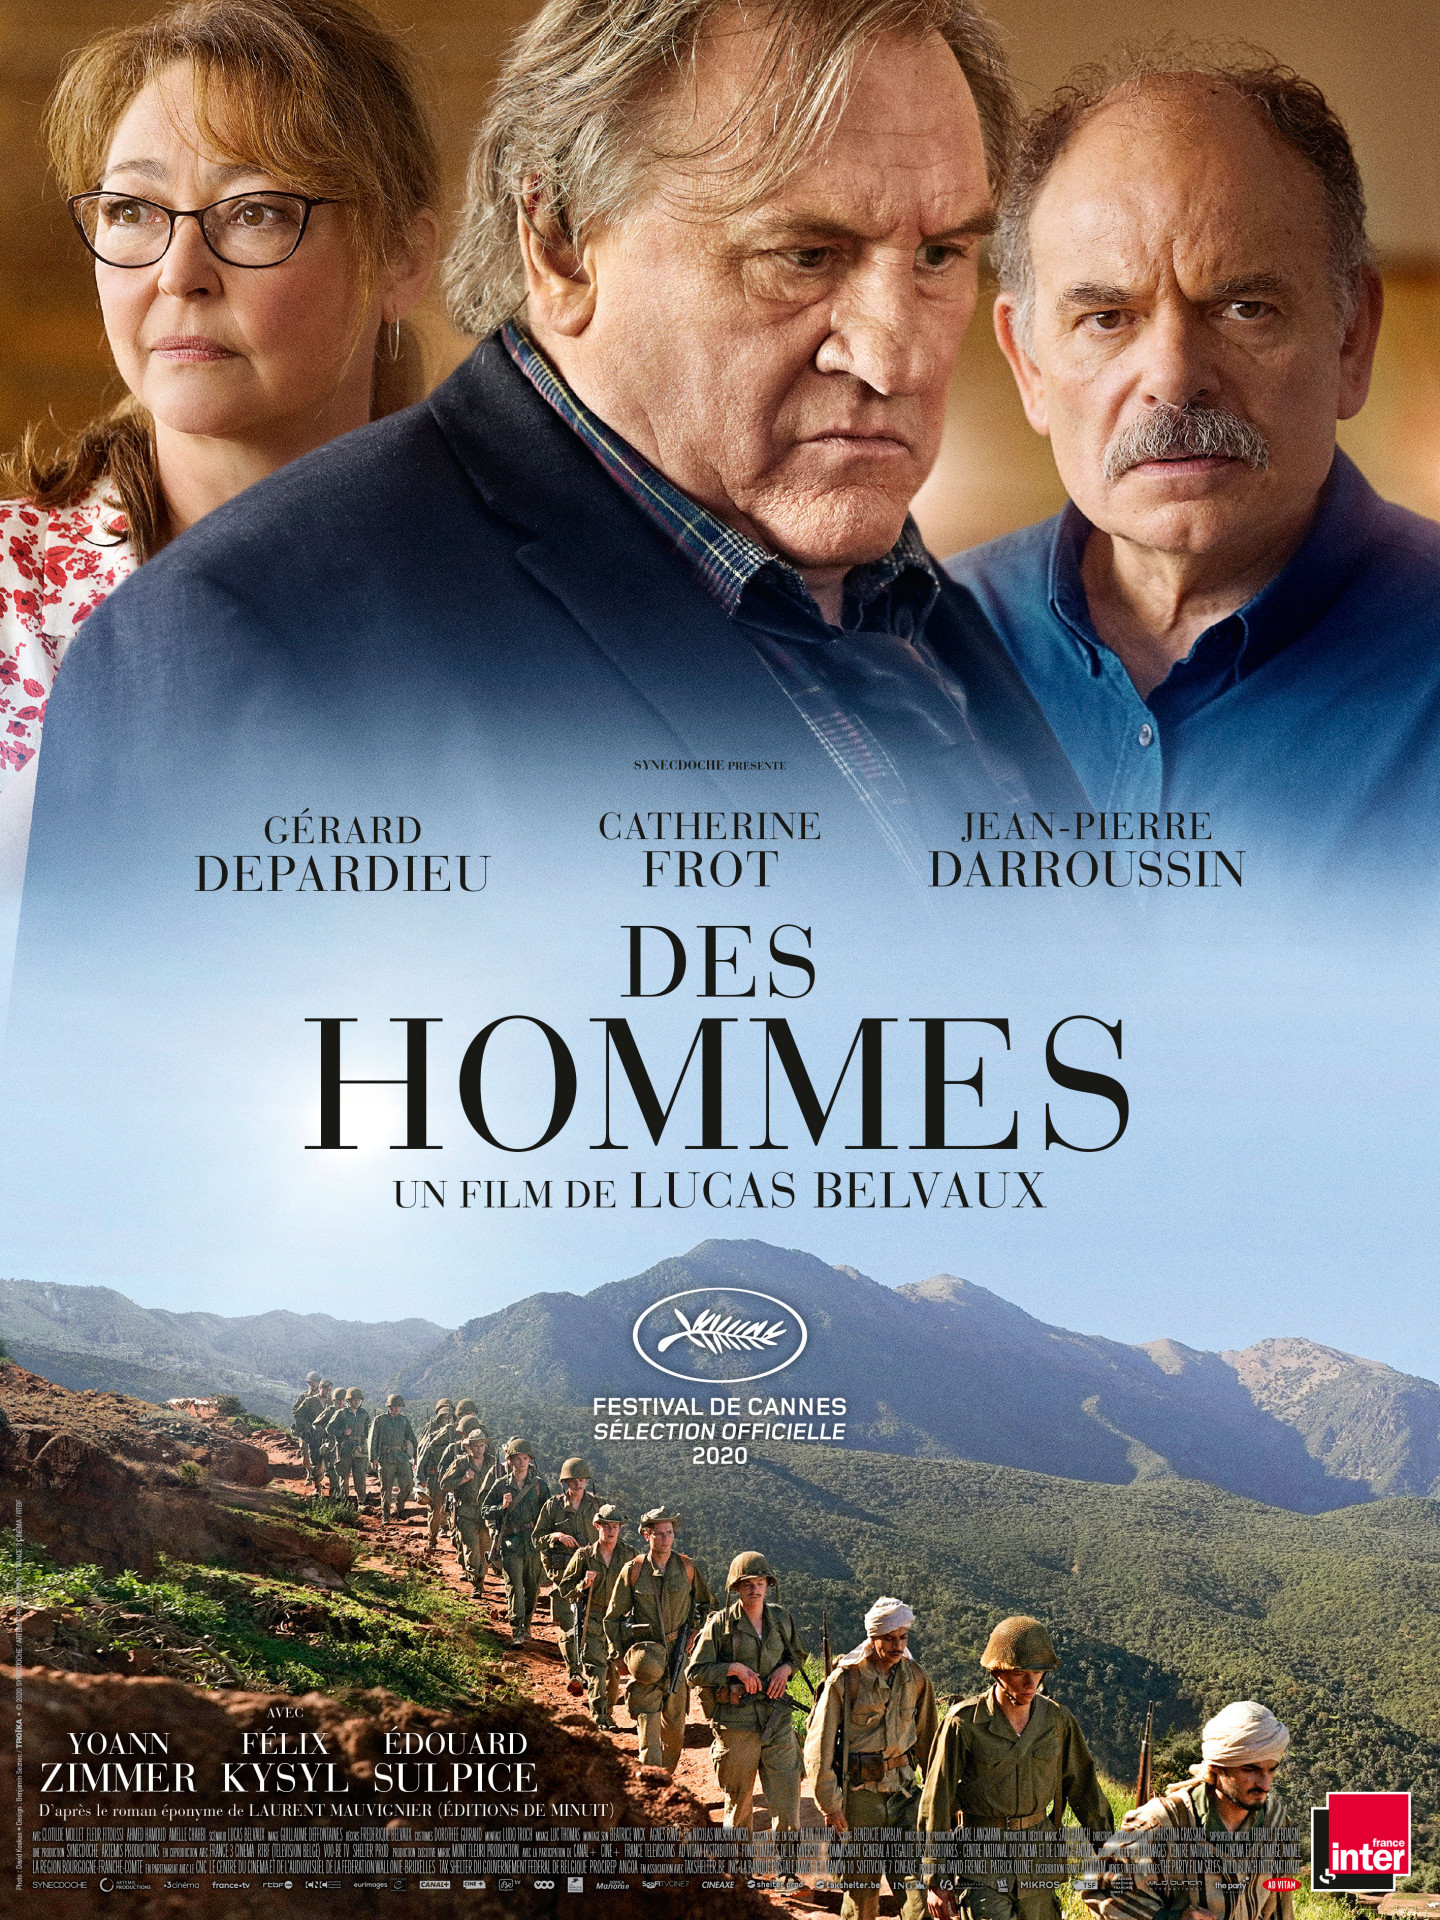 [SORTIE CINEMA] DES HOMMES de Lucas Belvaux